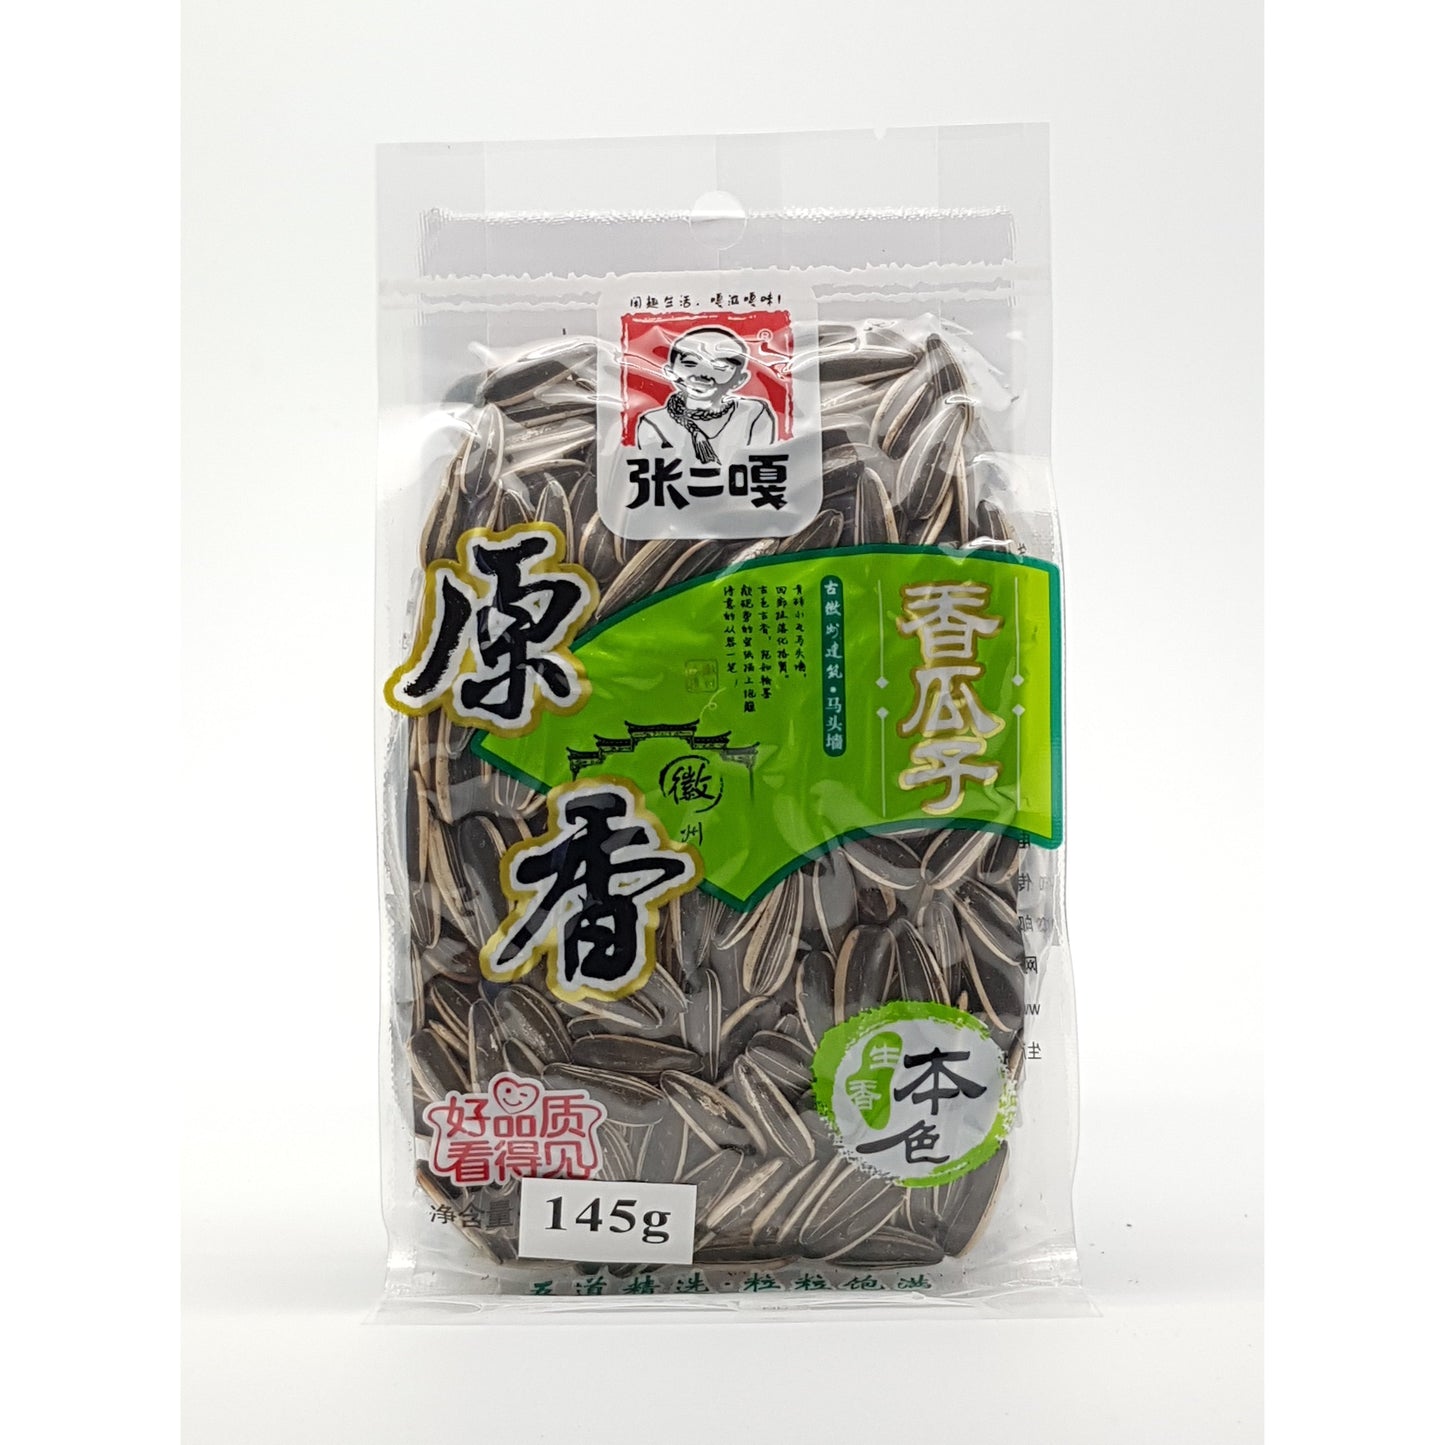 J053O Zhang Er Huan Brand -Sunflower Seed Original Flavor 145g - 22 Packages /1ctn - New Eastland Pty Ltd - Asian food wholesalers